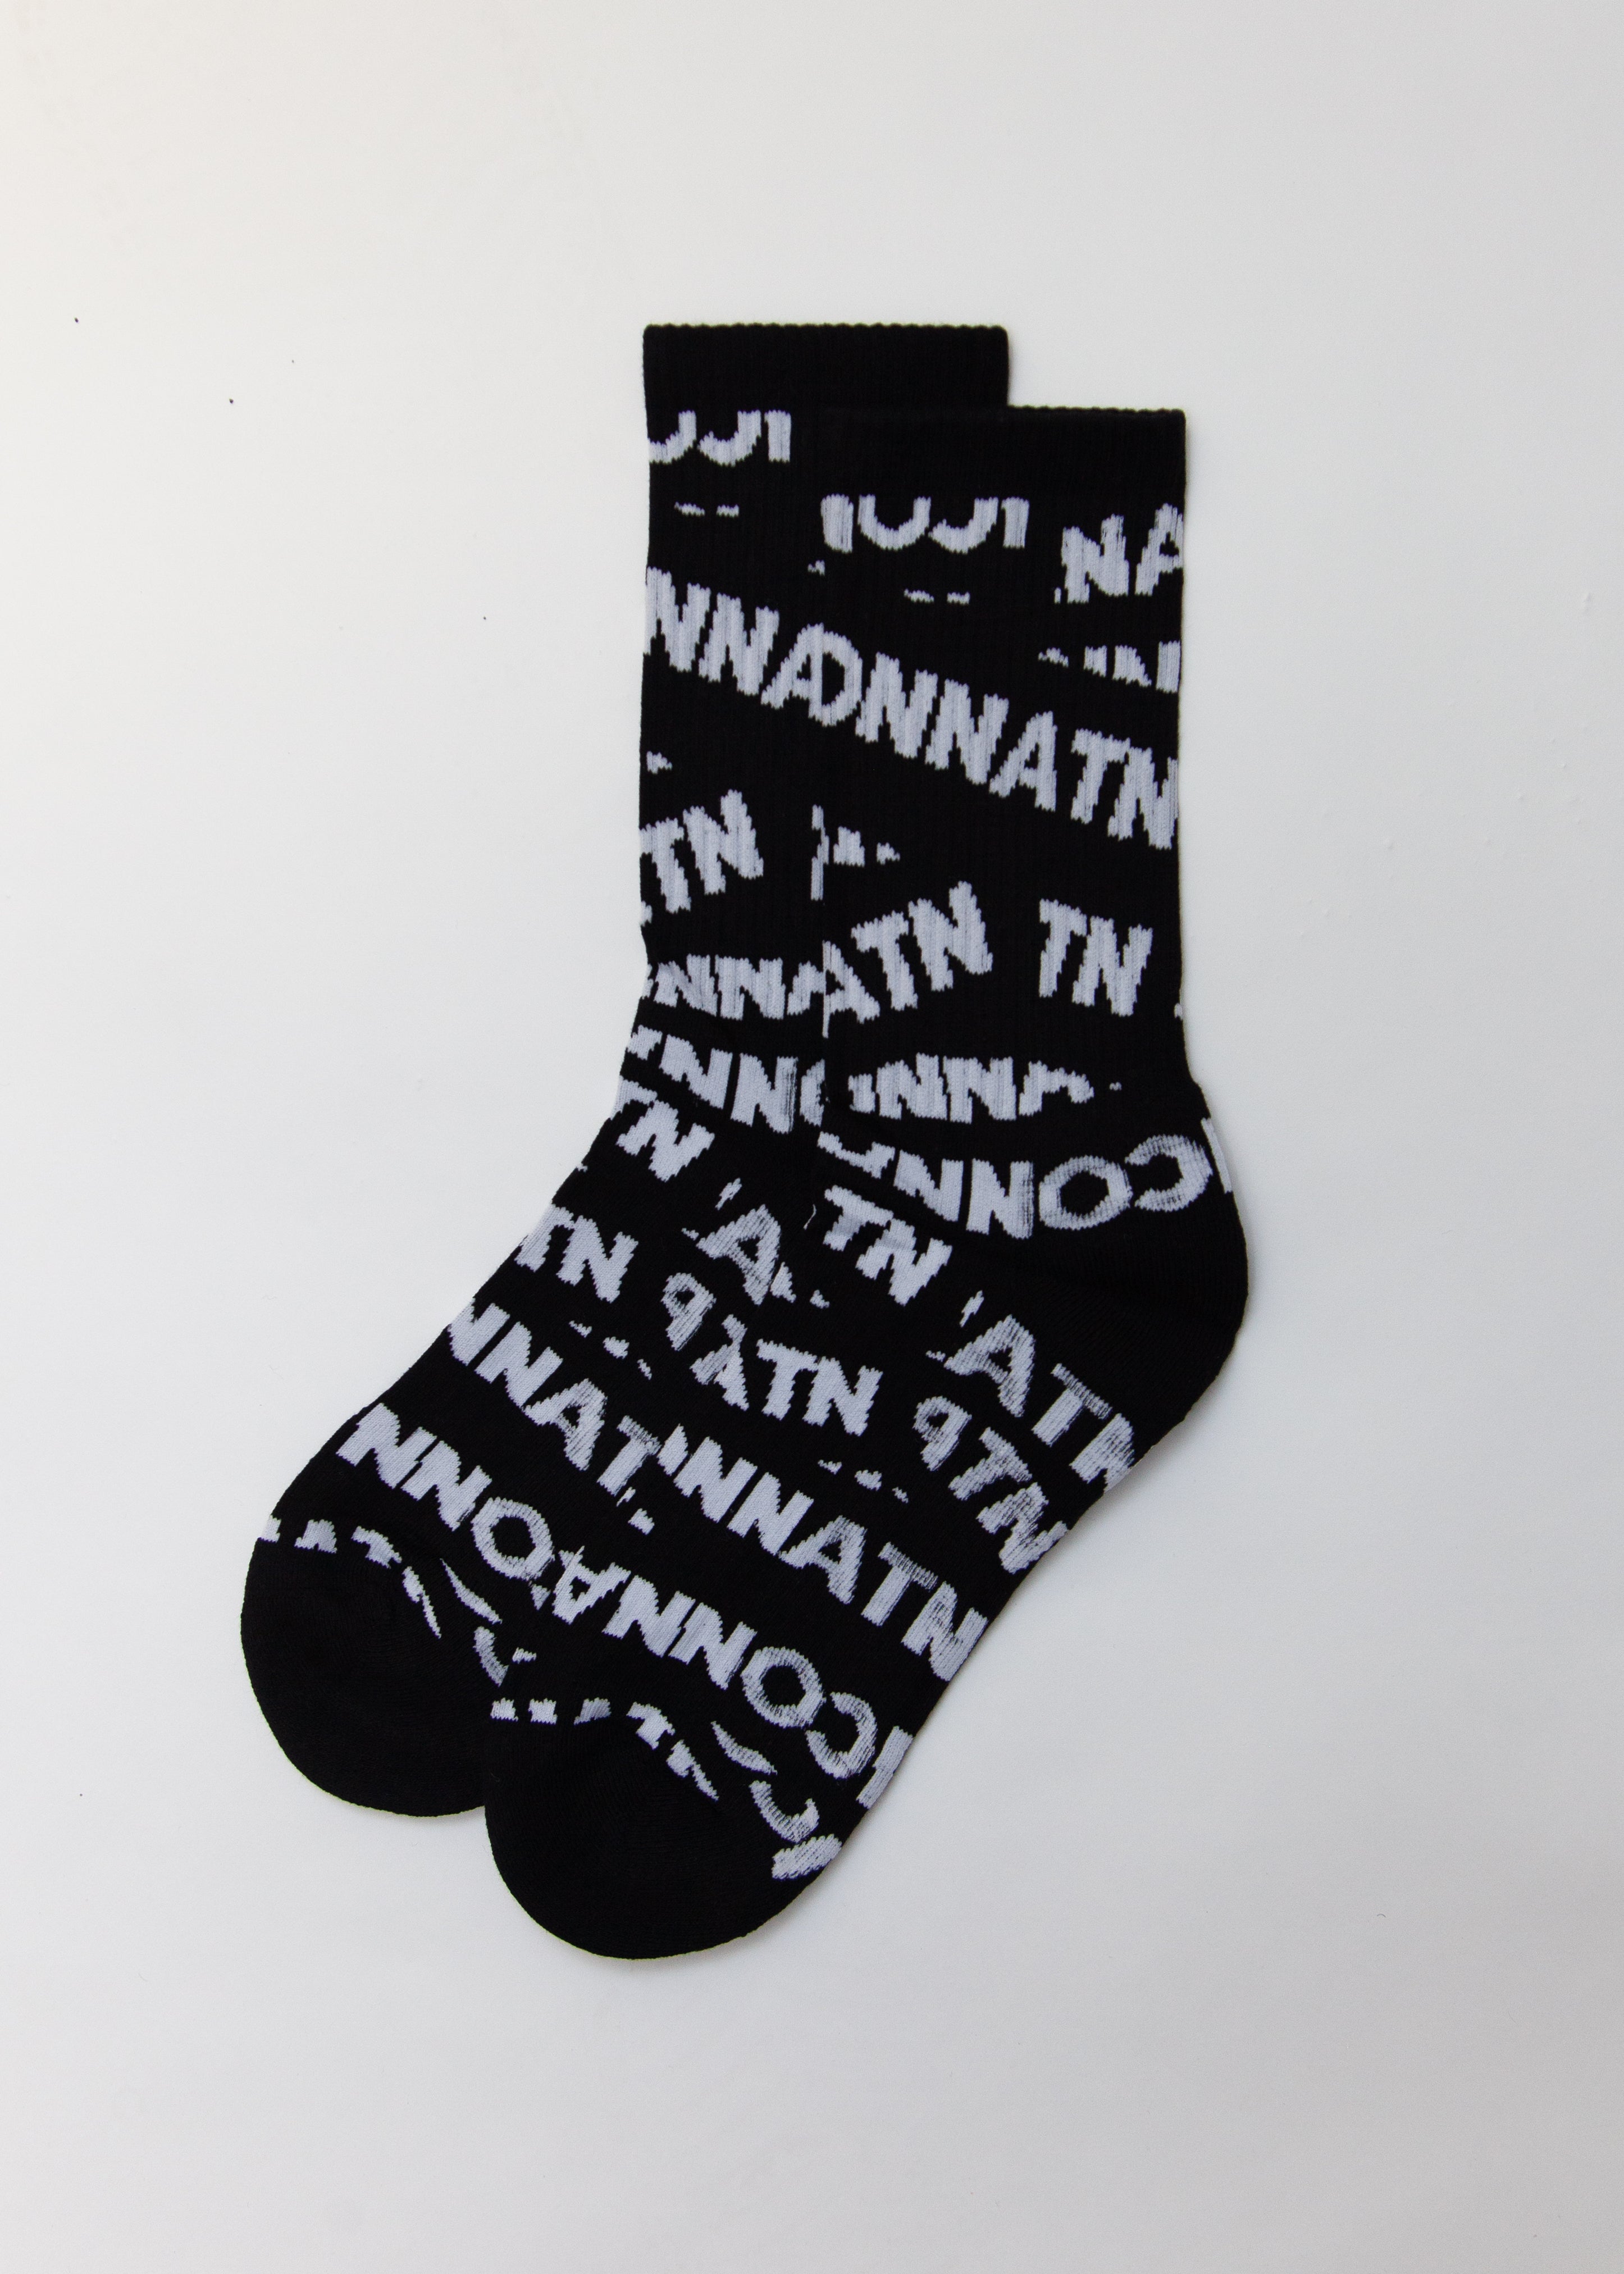 ICONNATN Sock